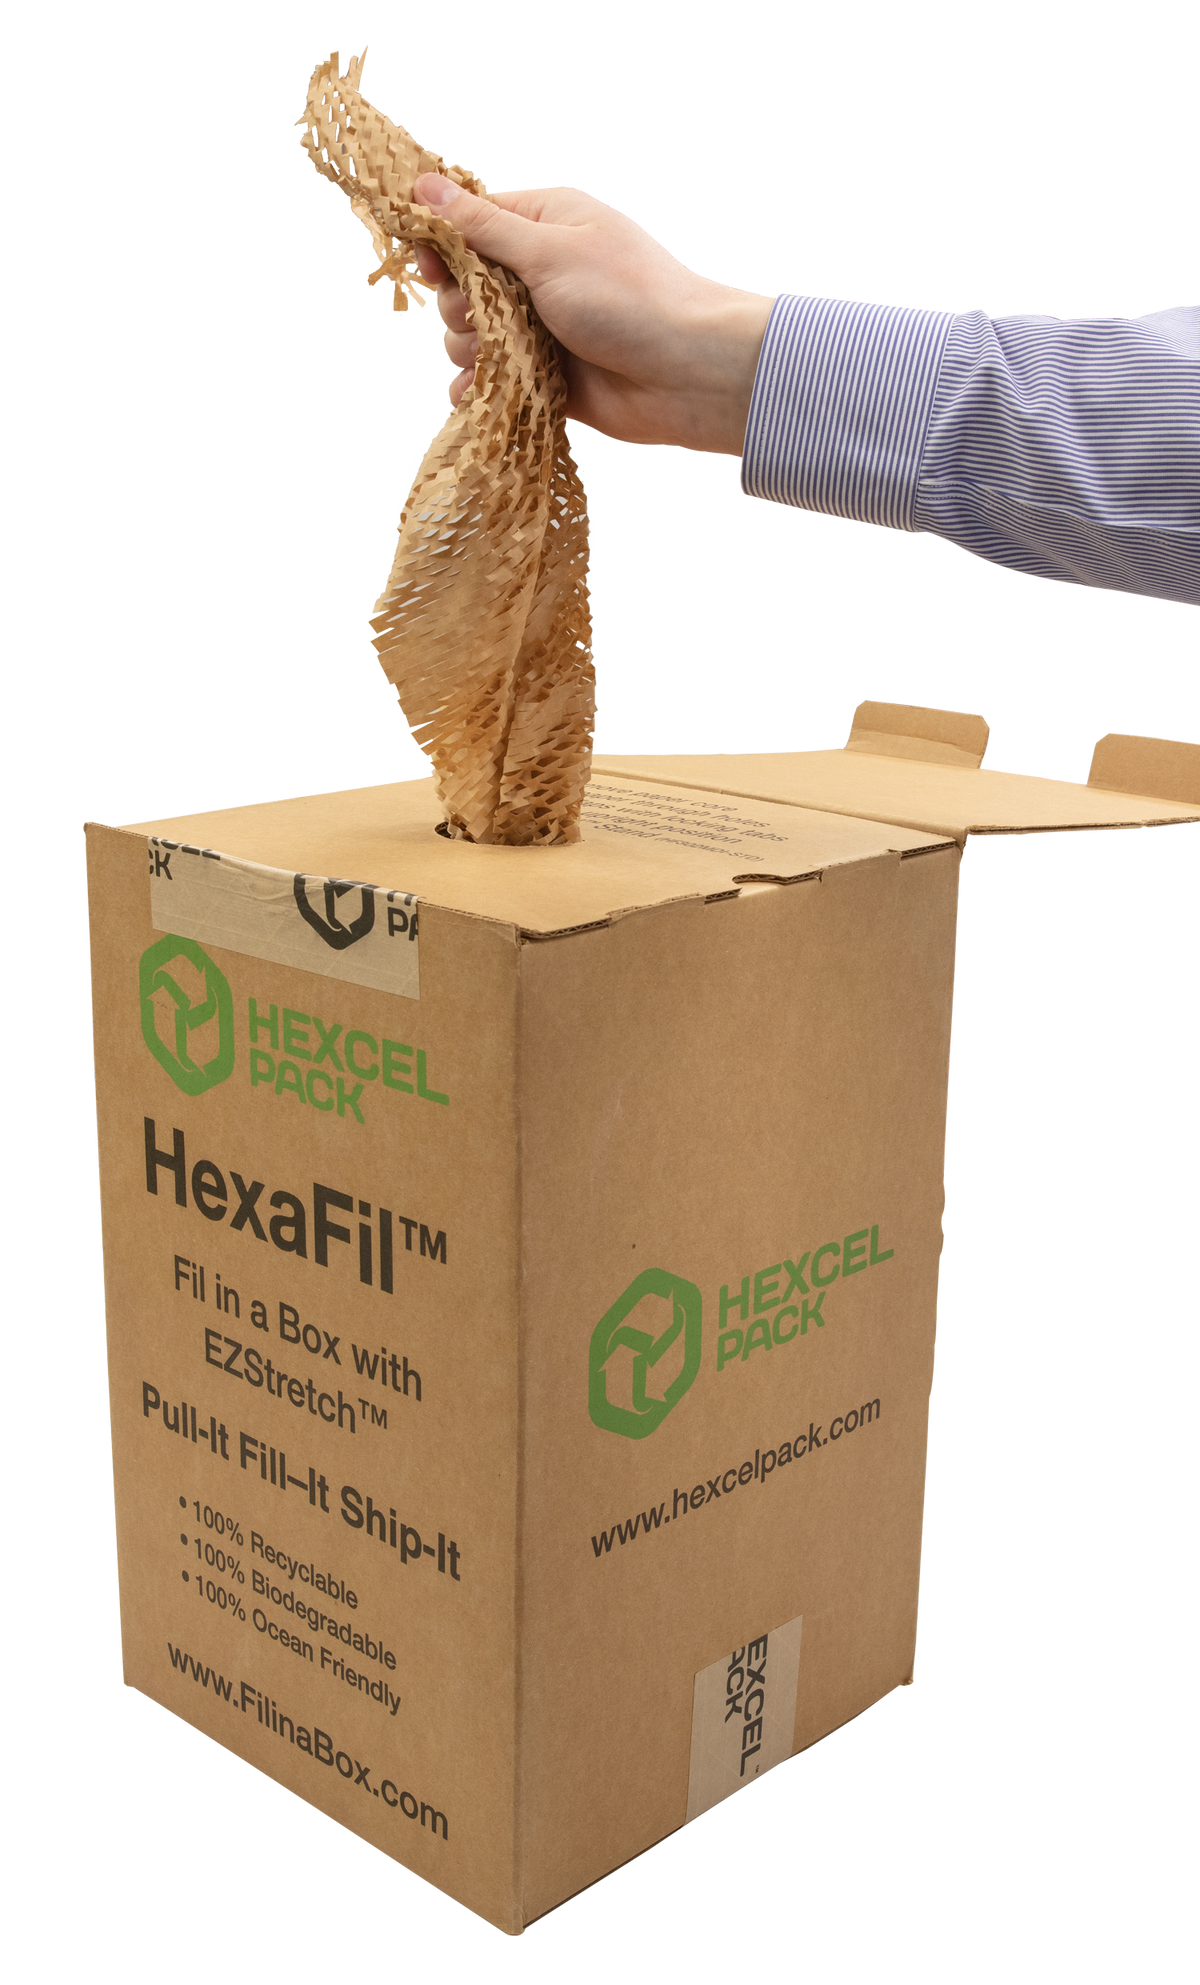 HexaFil Hexcelpack - Portable Void-fill box